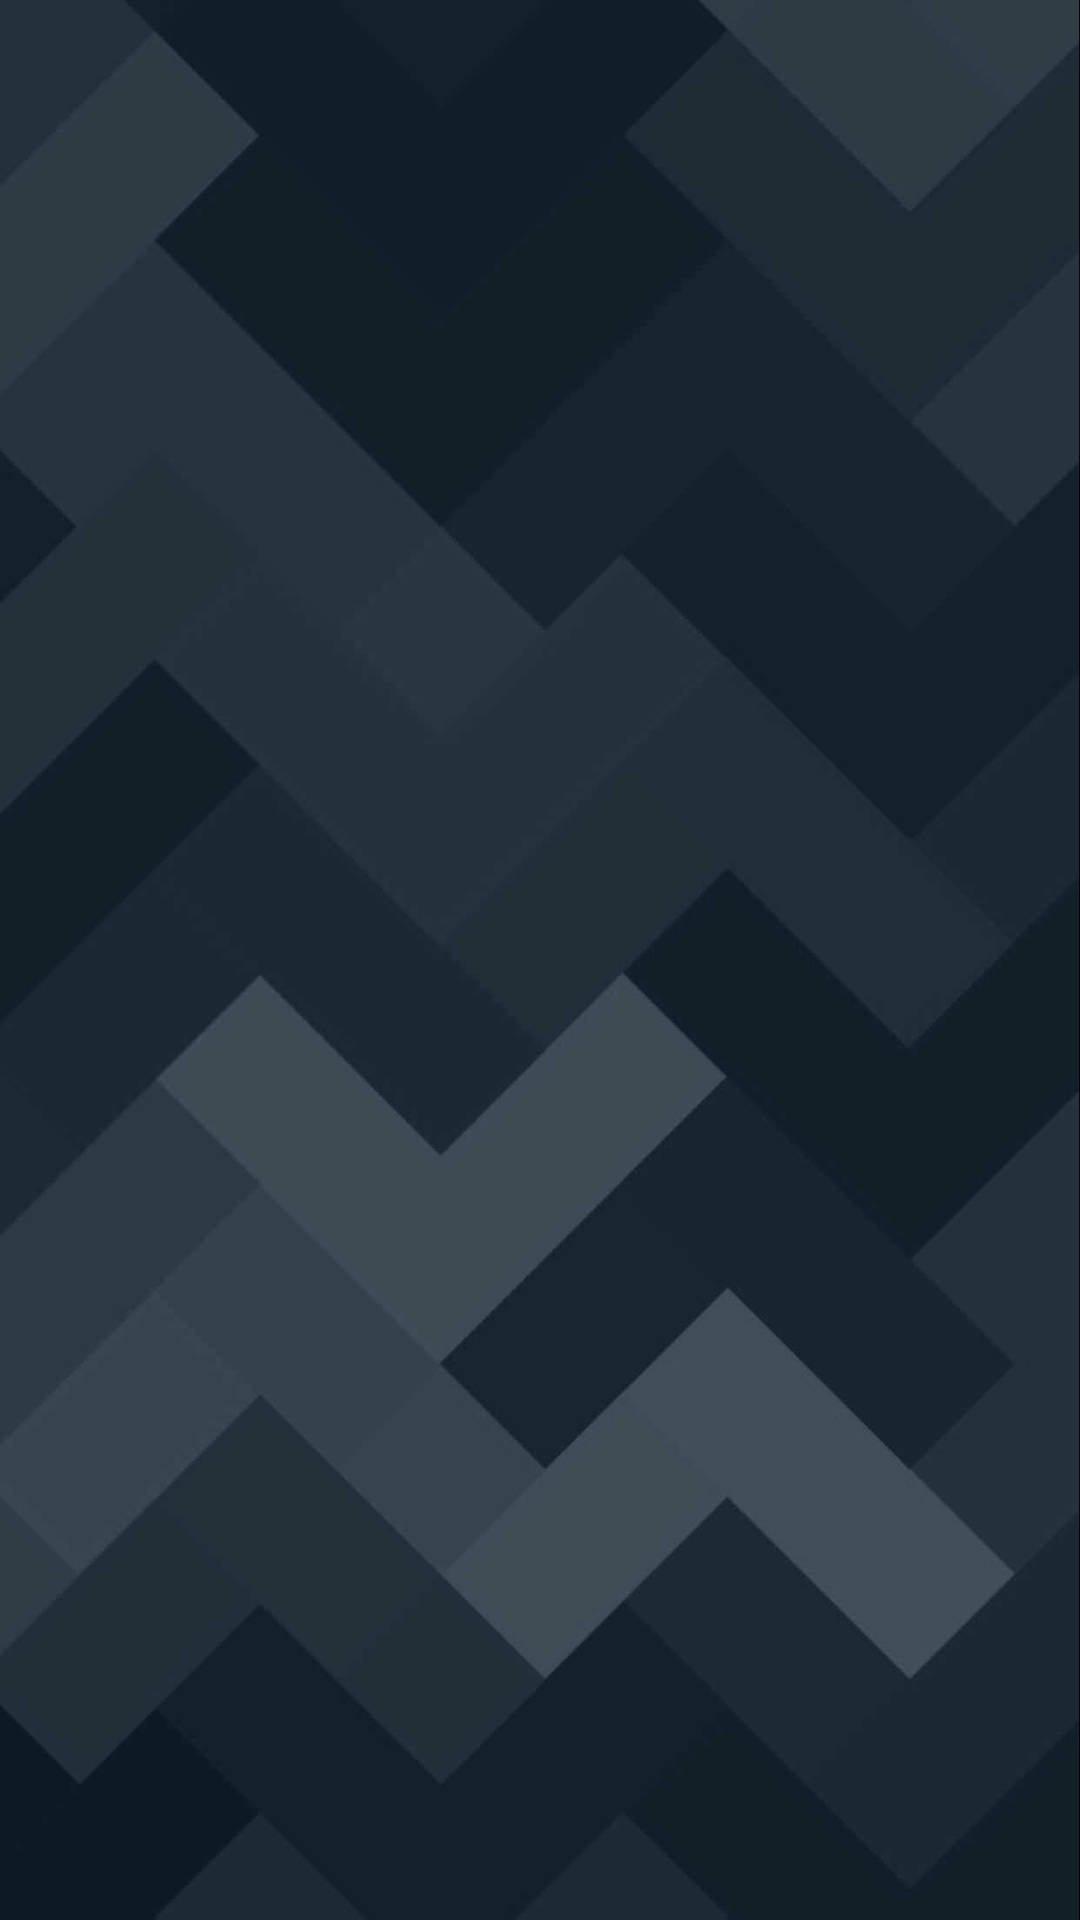 Dark Chevron Patterns Minimalist Android Wallpaper